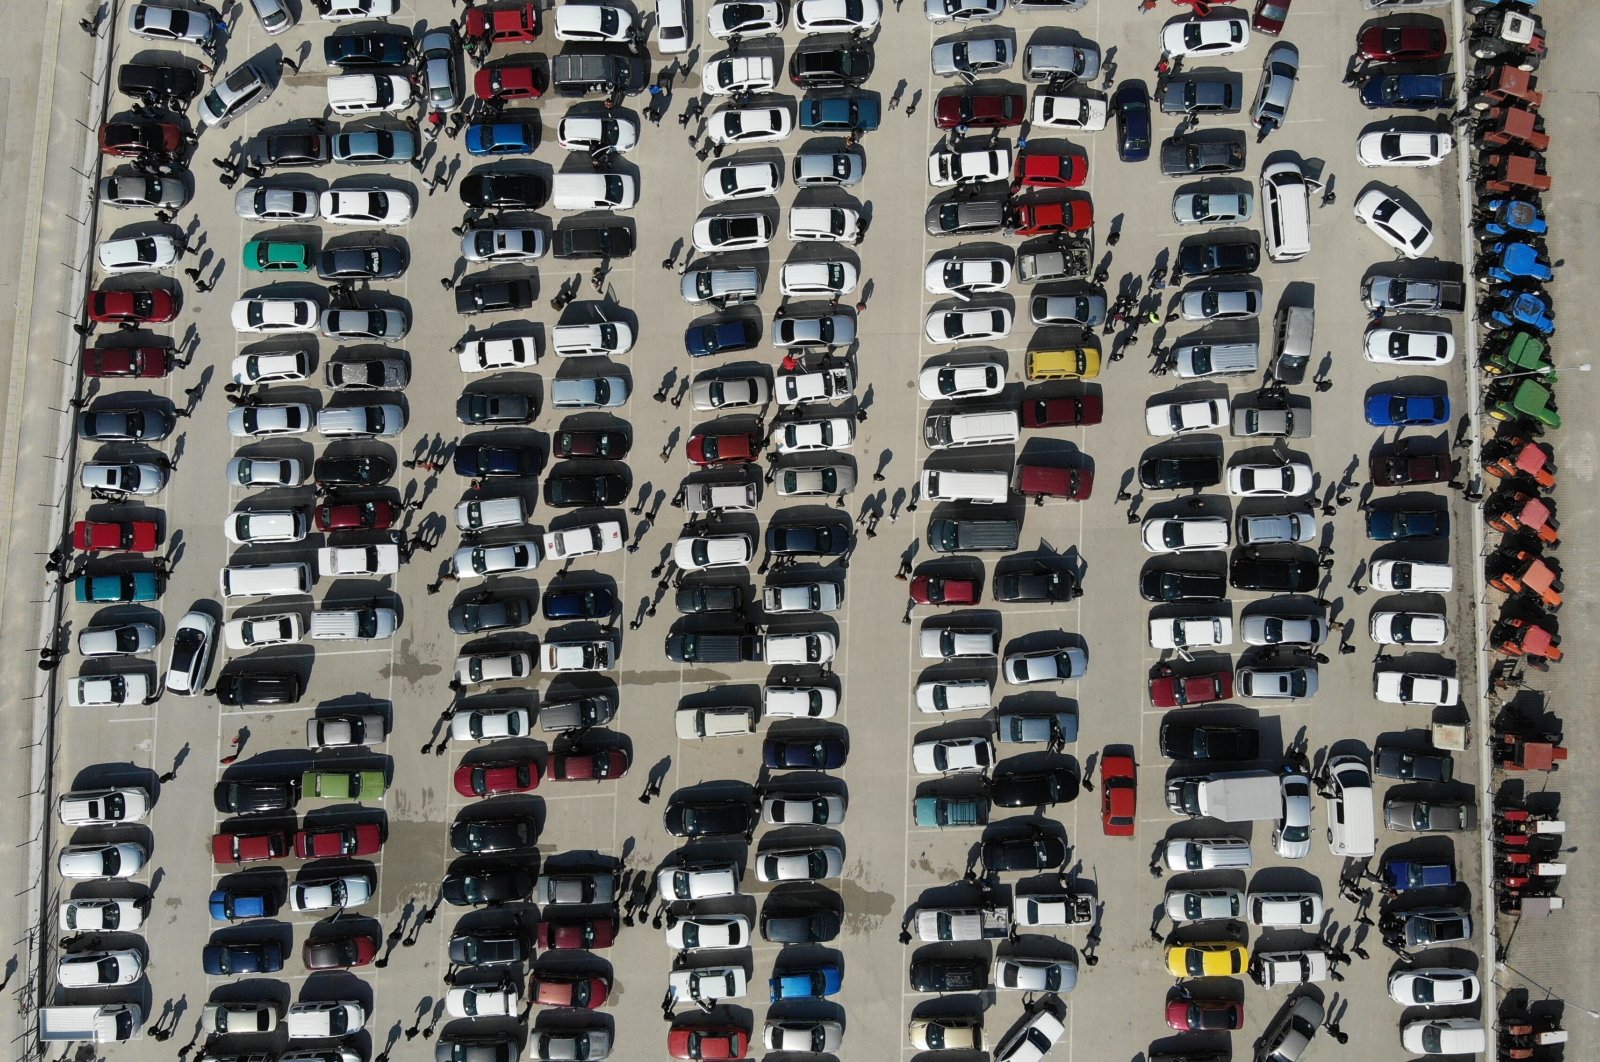 Vehicles are seen in a secondhand car lot in Eskişehir, northwestern Turkey, March 27, 2022. (IHA Photo)